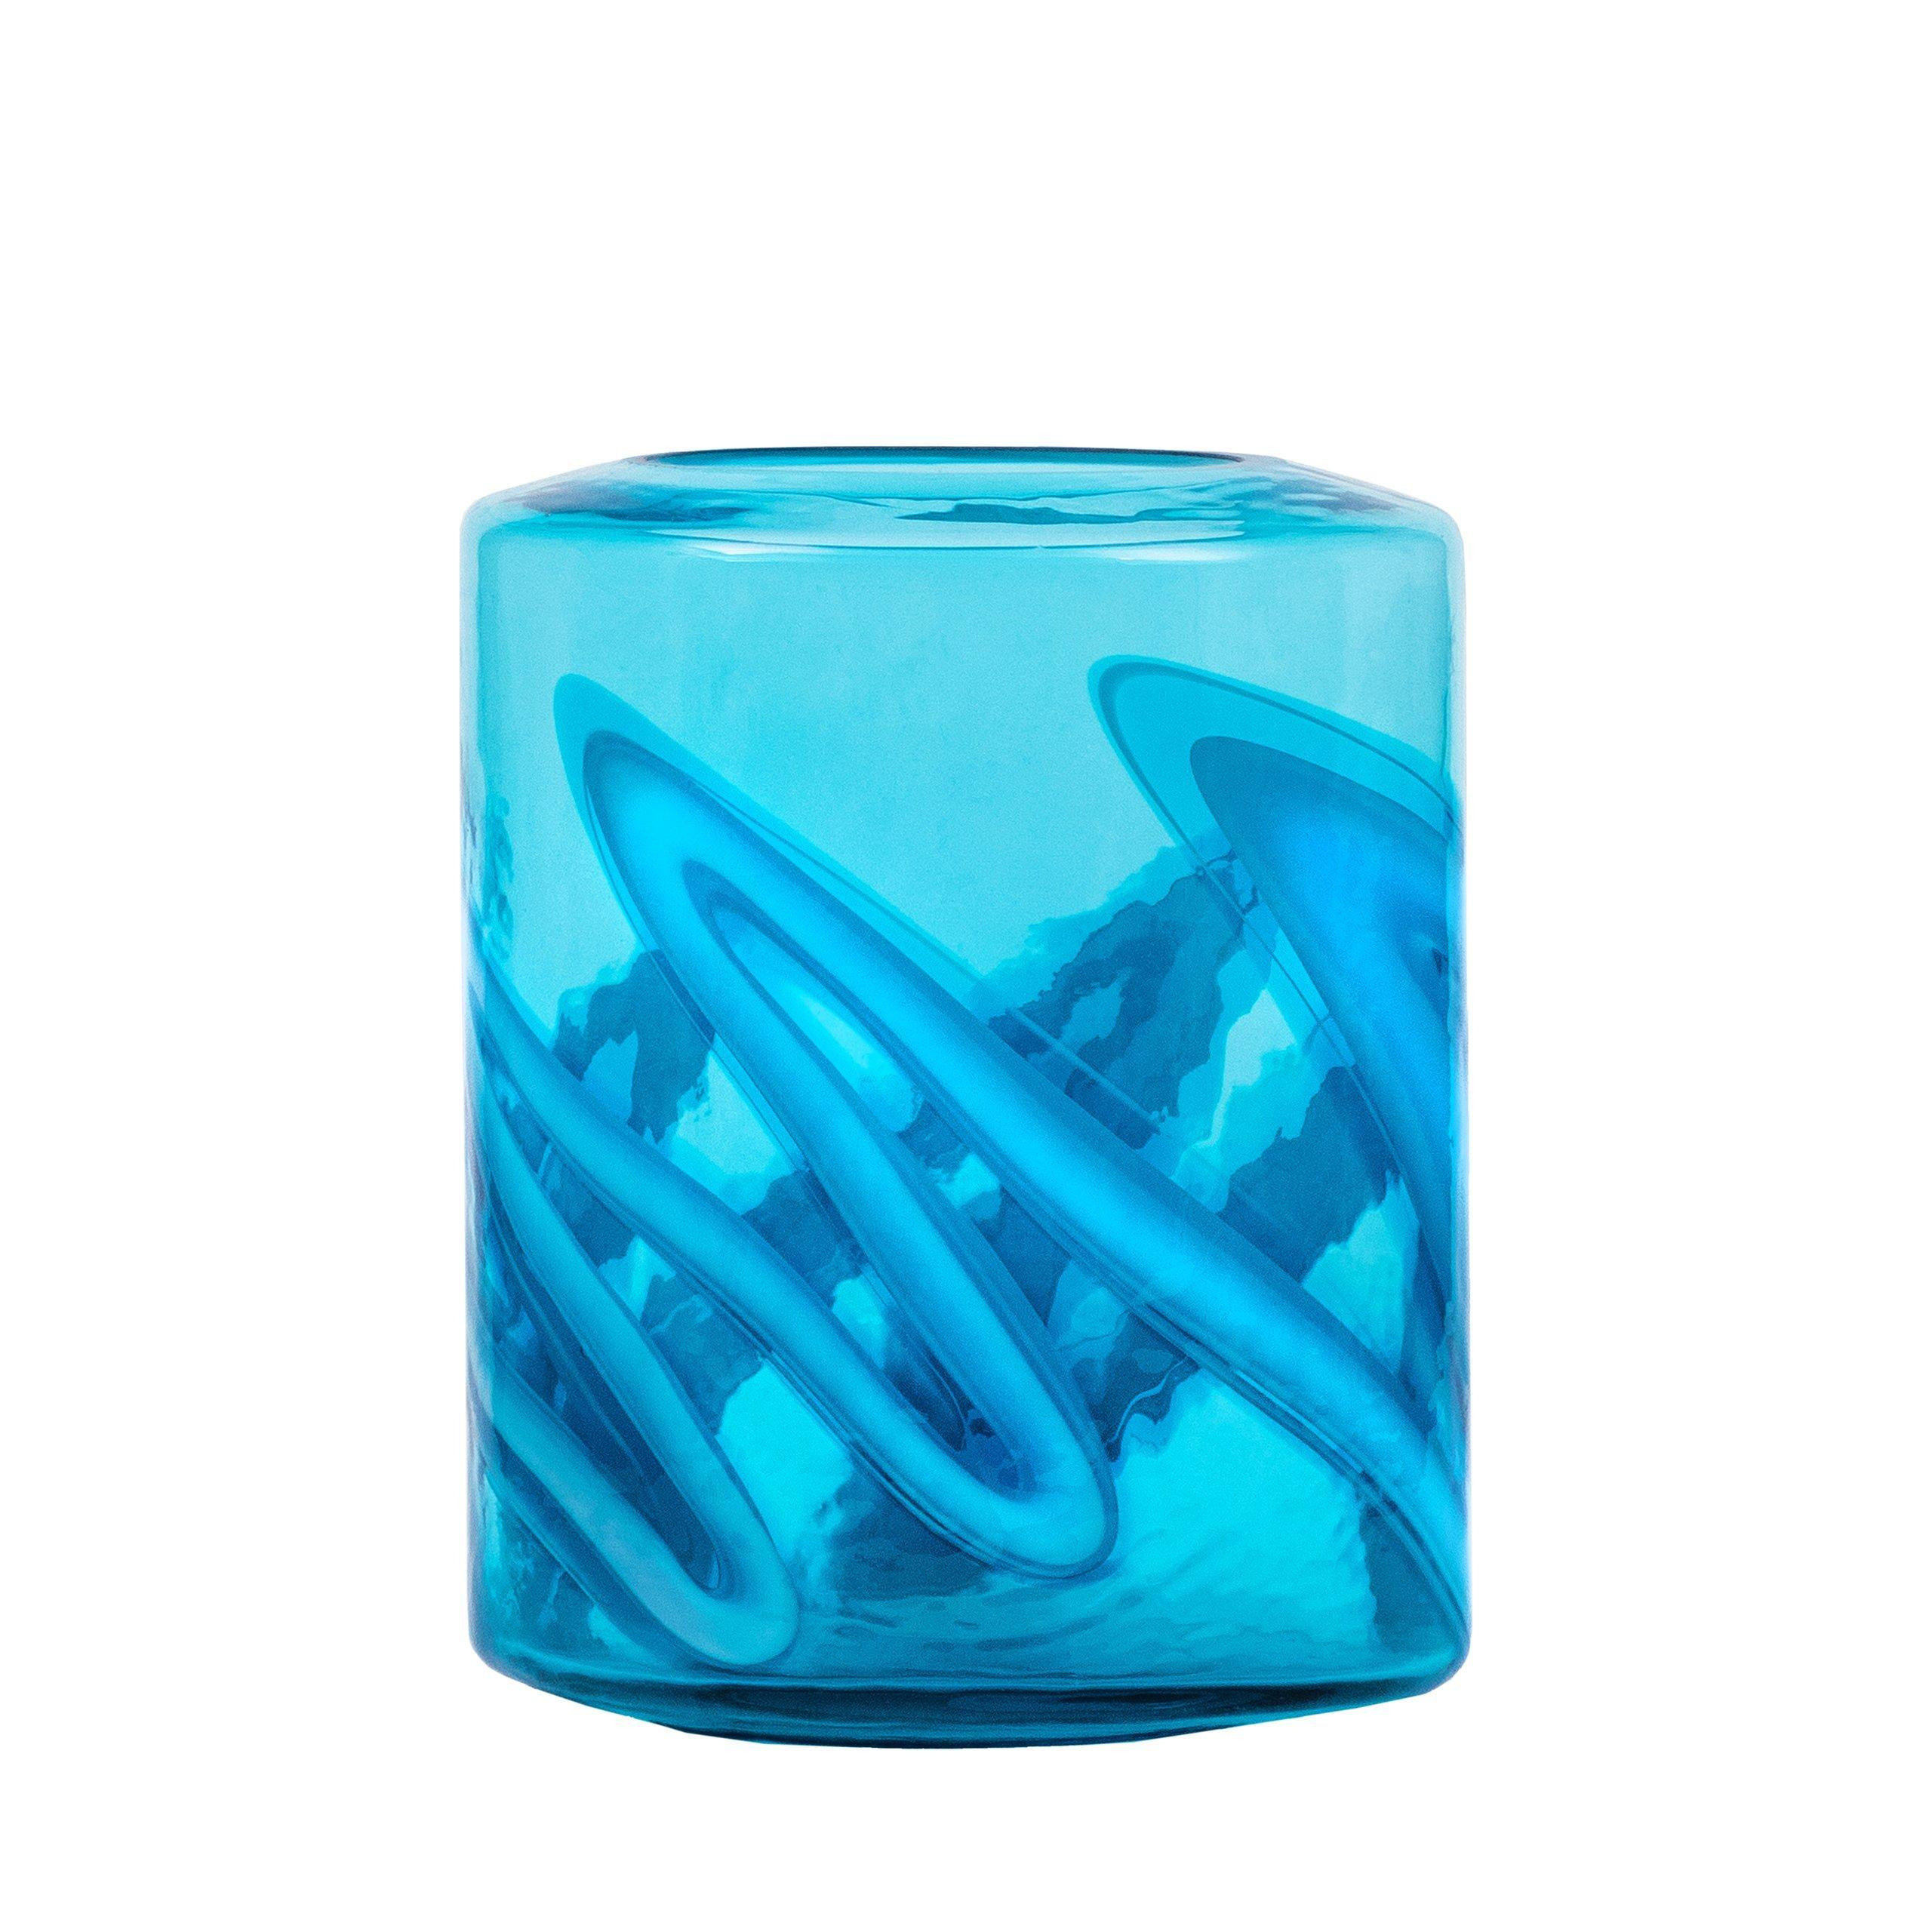 Elbe Hand-Blown Glass Vase - image 1